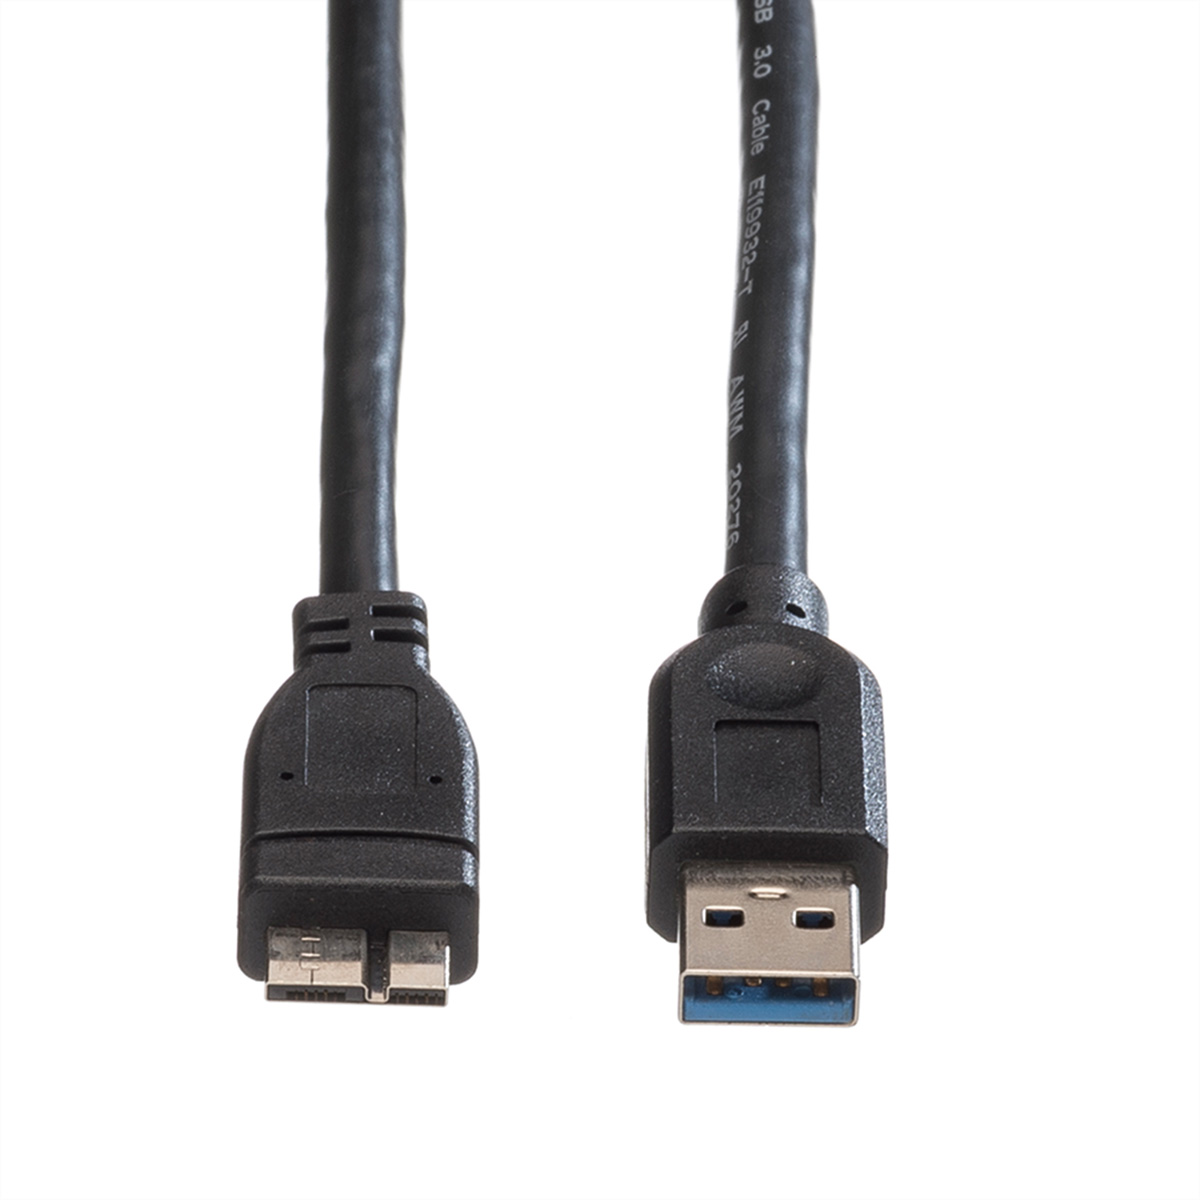 A ROLINE Kabel, Micro 3.2 Gen Kabel USB 3.2 B - Micro ST USB 1 ST